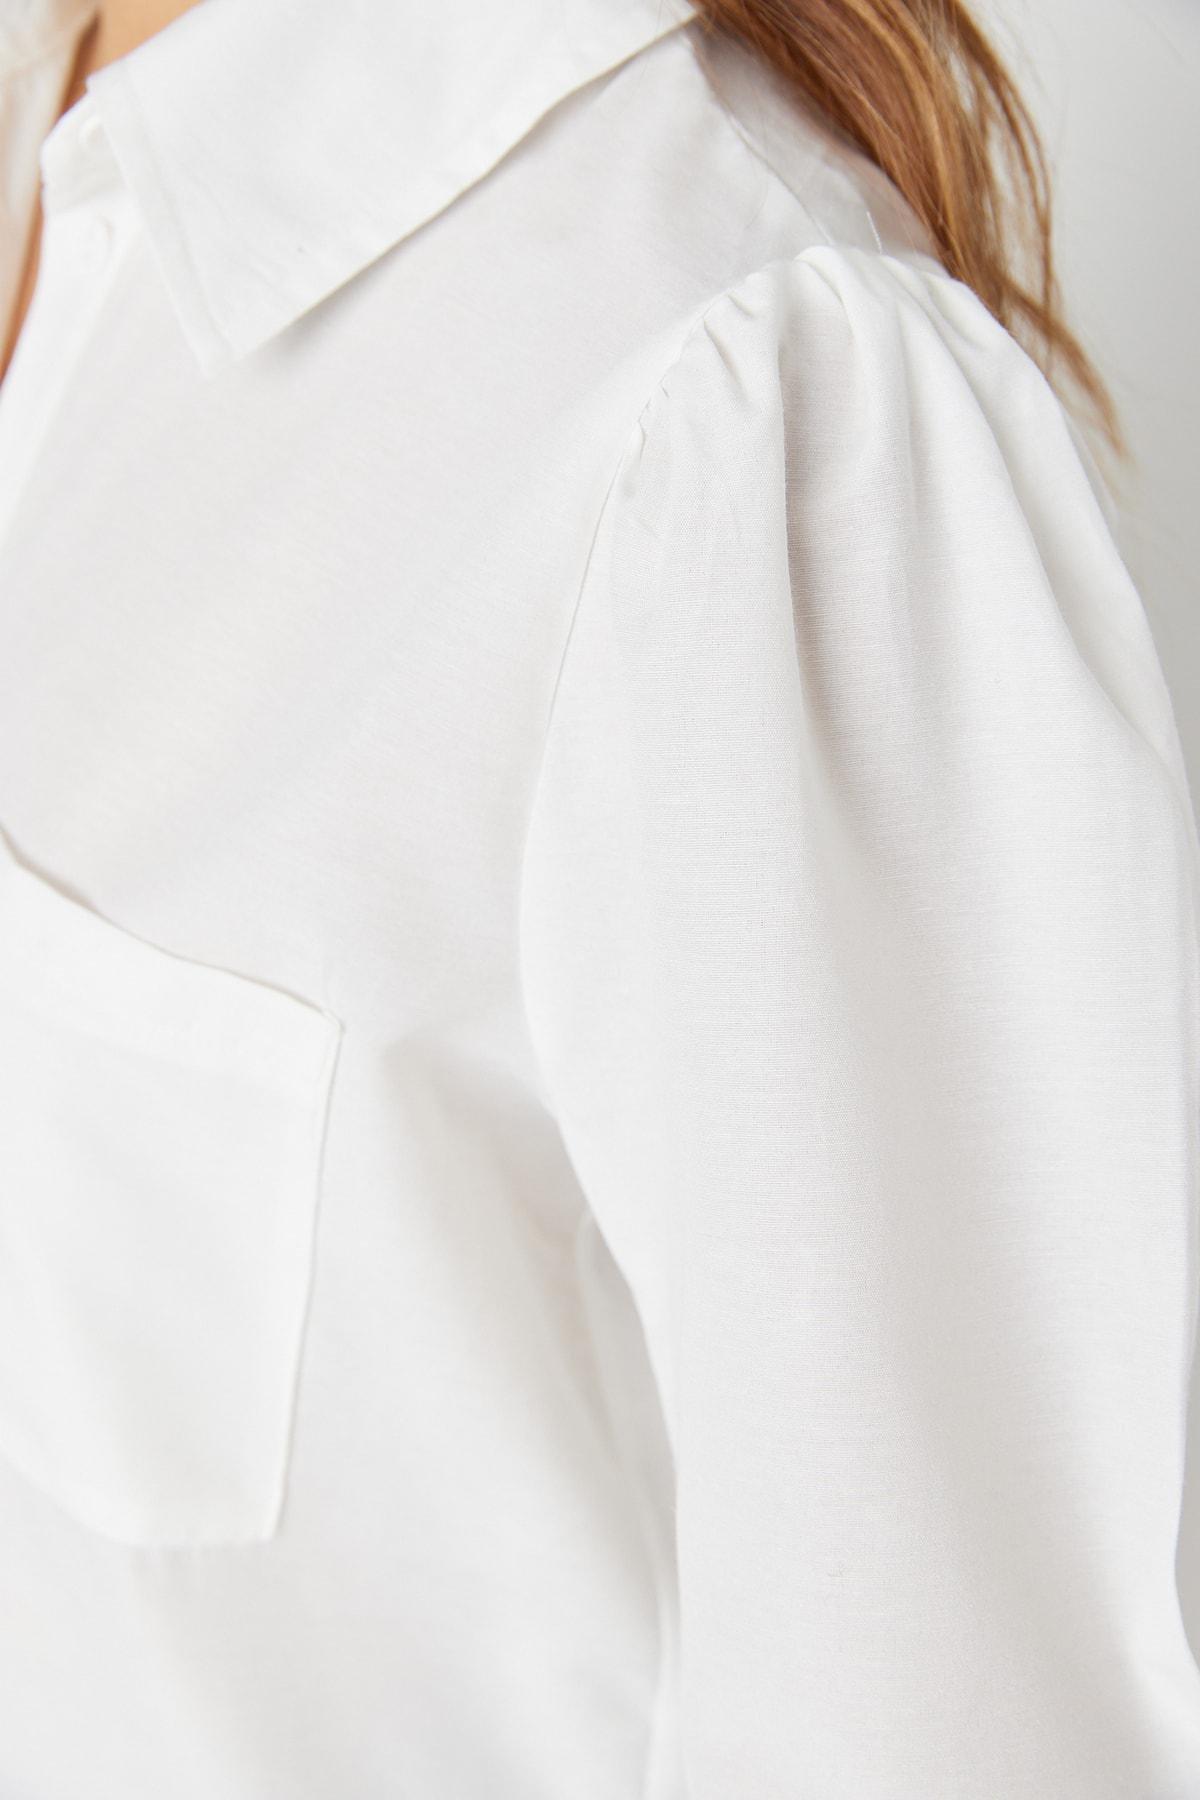 Trendyol - White Collared Shirt